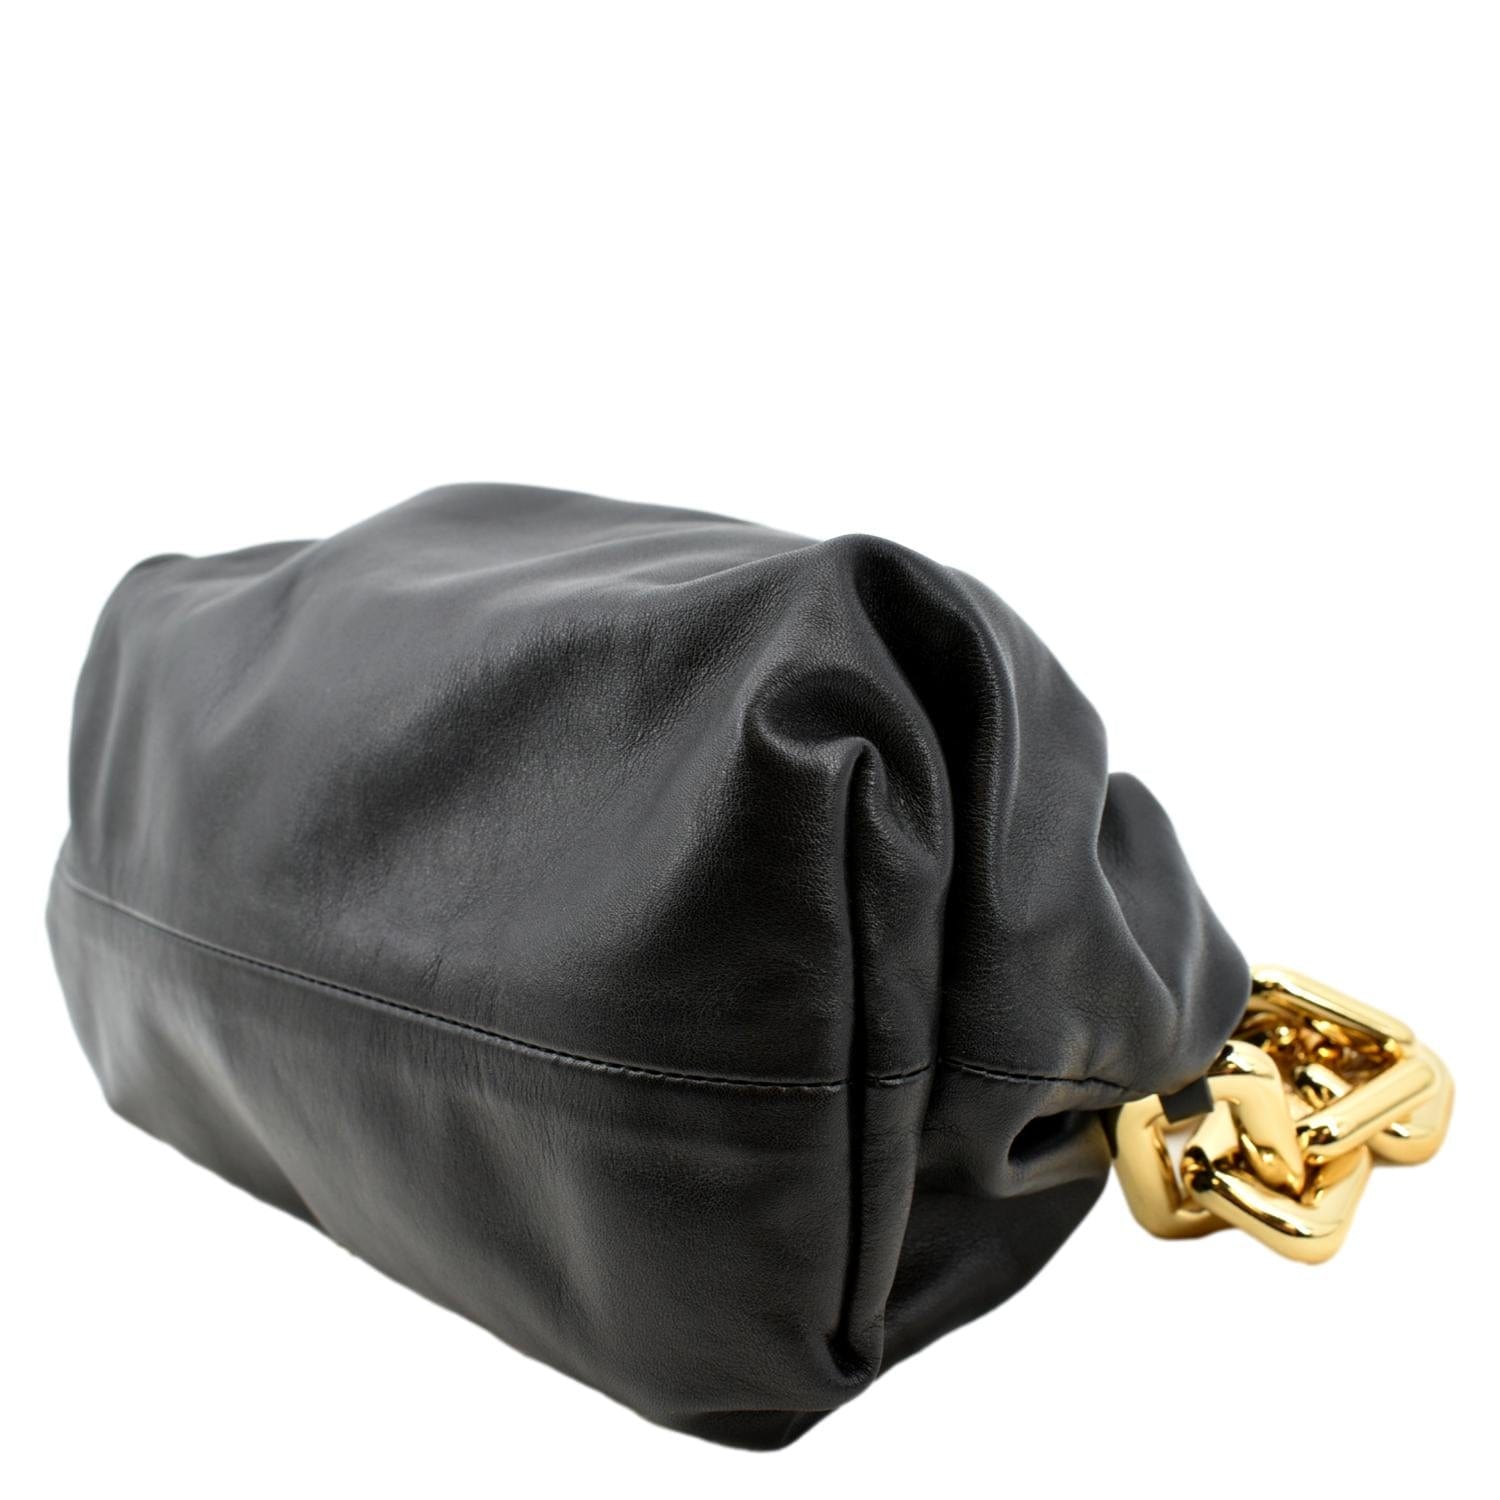 Bottega Veneta The Chain Pouch Leather Shoulder Bag